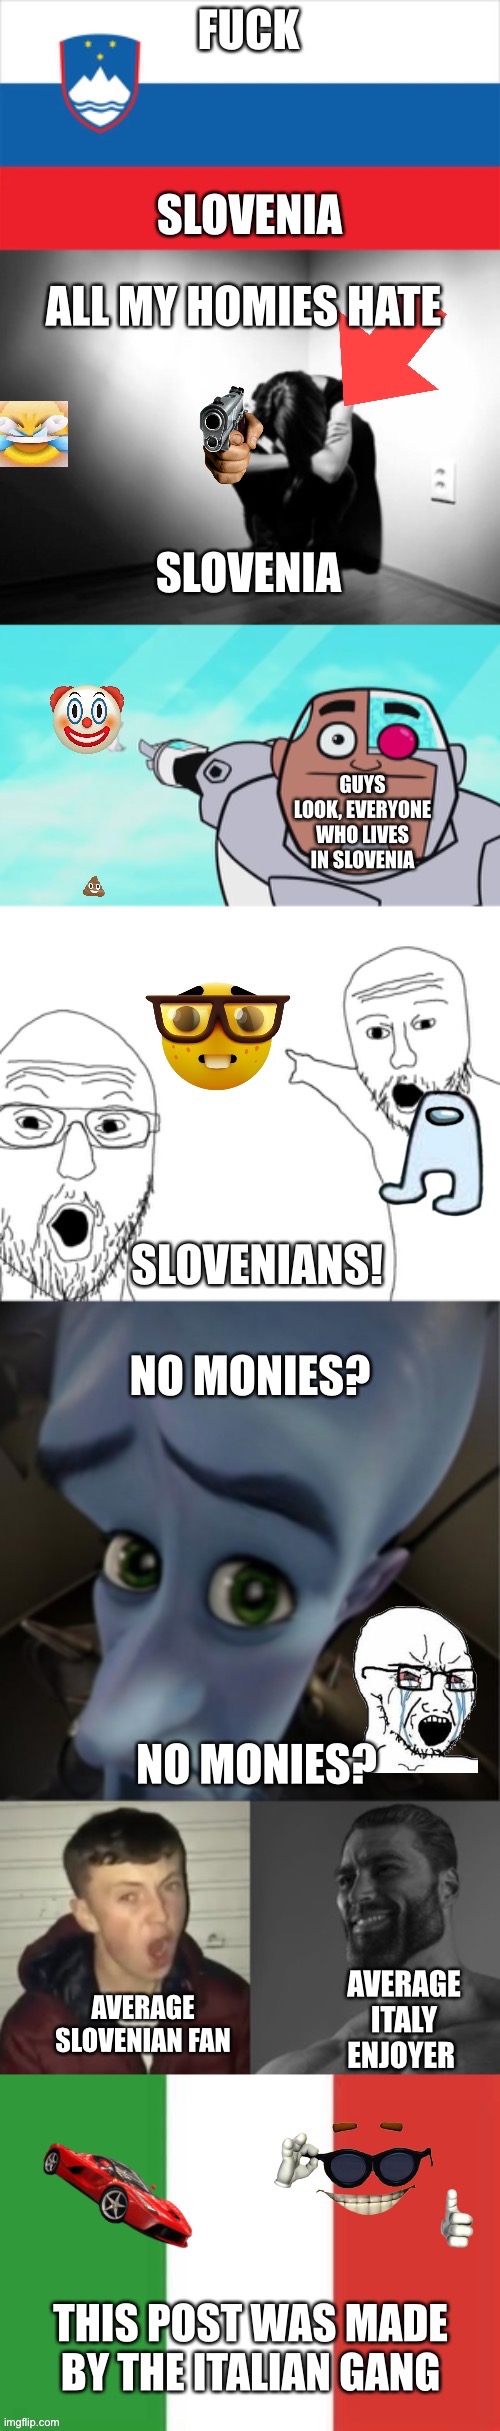 Destroy slovenia | image tagged in memes,funny,italy,megamind peeking,guys look a birdie,average fan vs average enjoyer | made w/ Imgflip meme maker